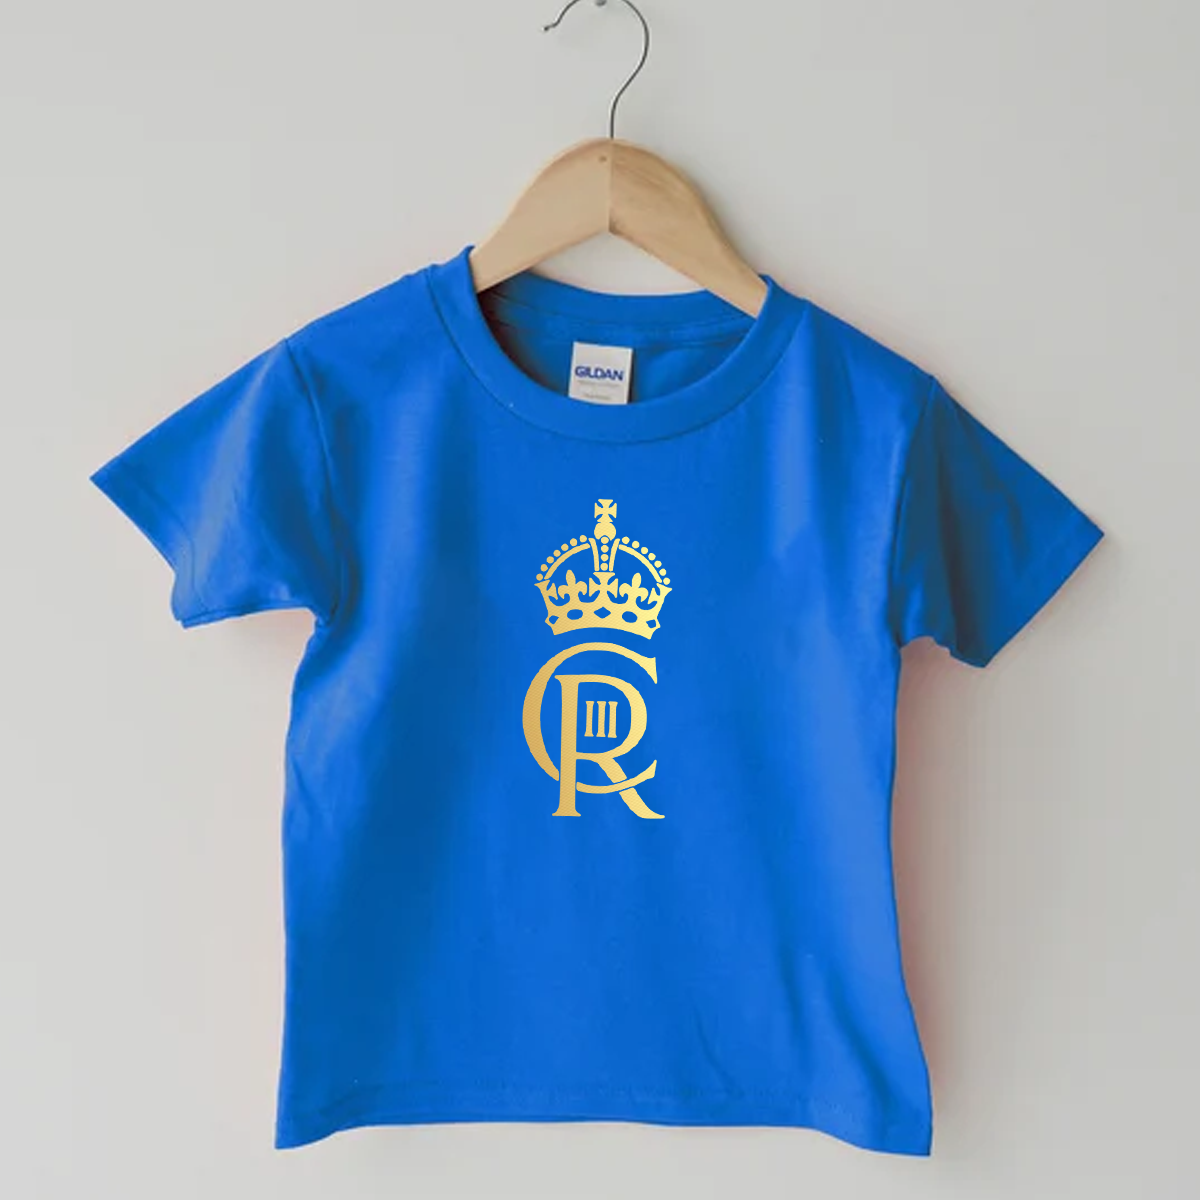 King Charles III Royal Emblem Blue T-Shirt - Coronation Day